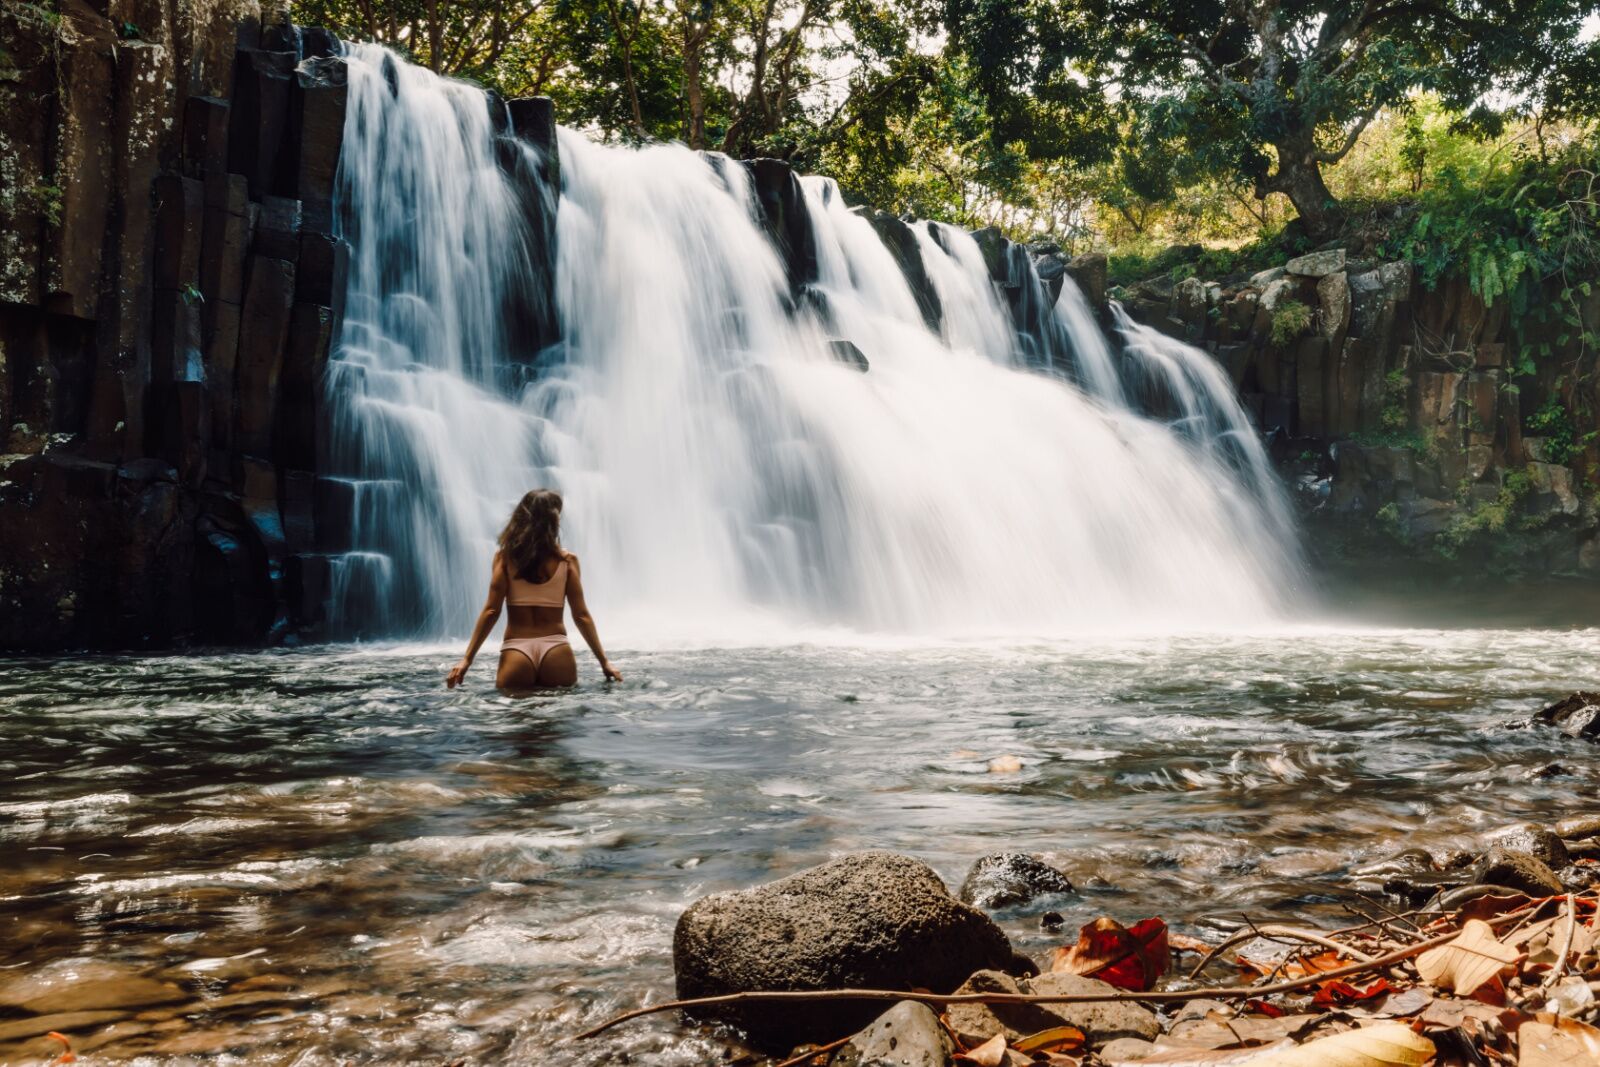 Mauritius vacation on budget - waterfall 